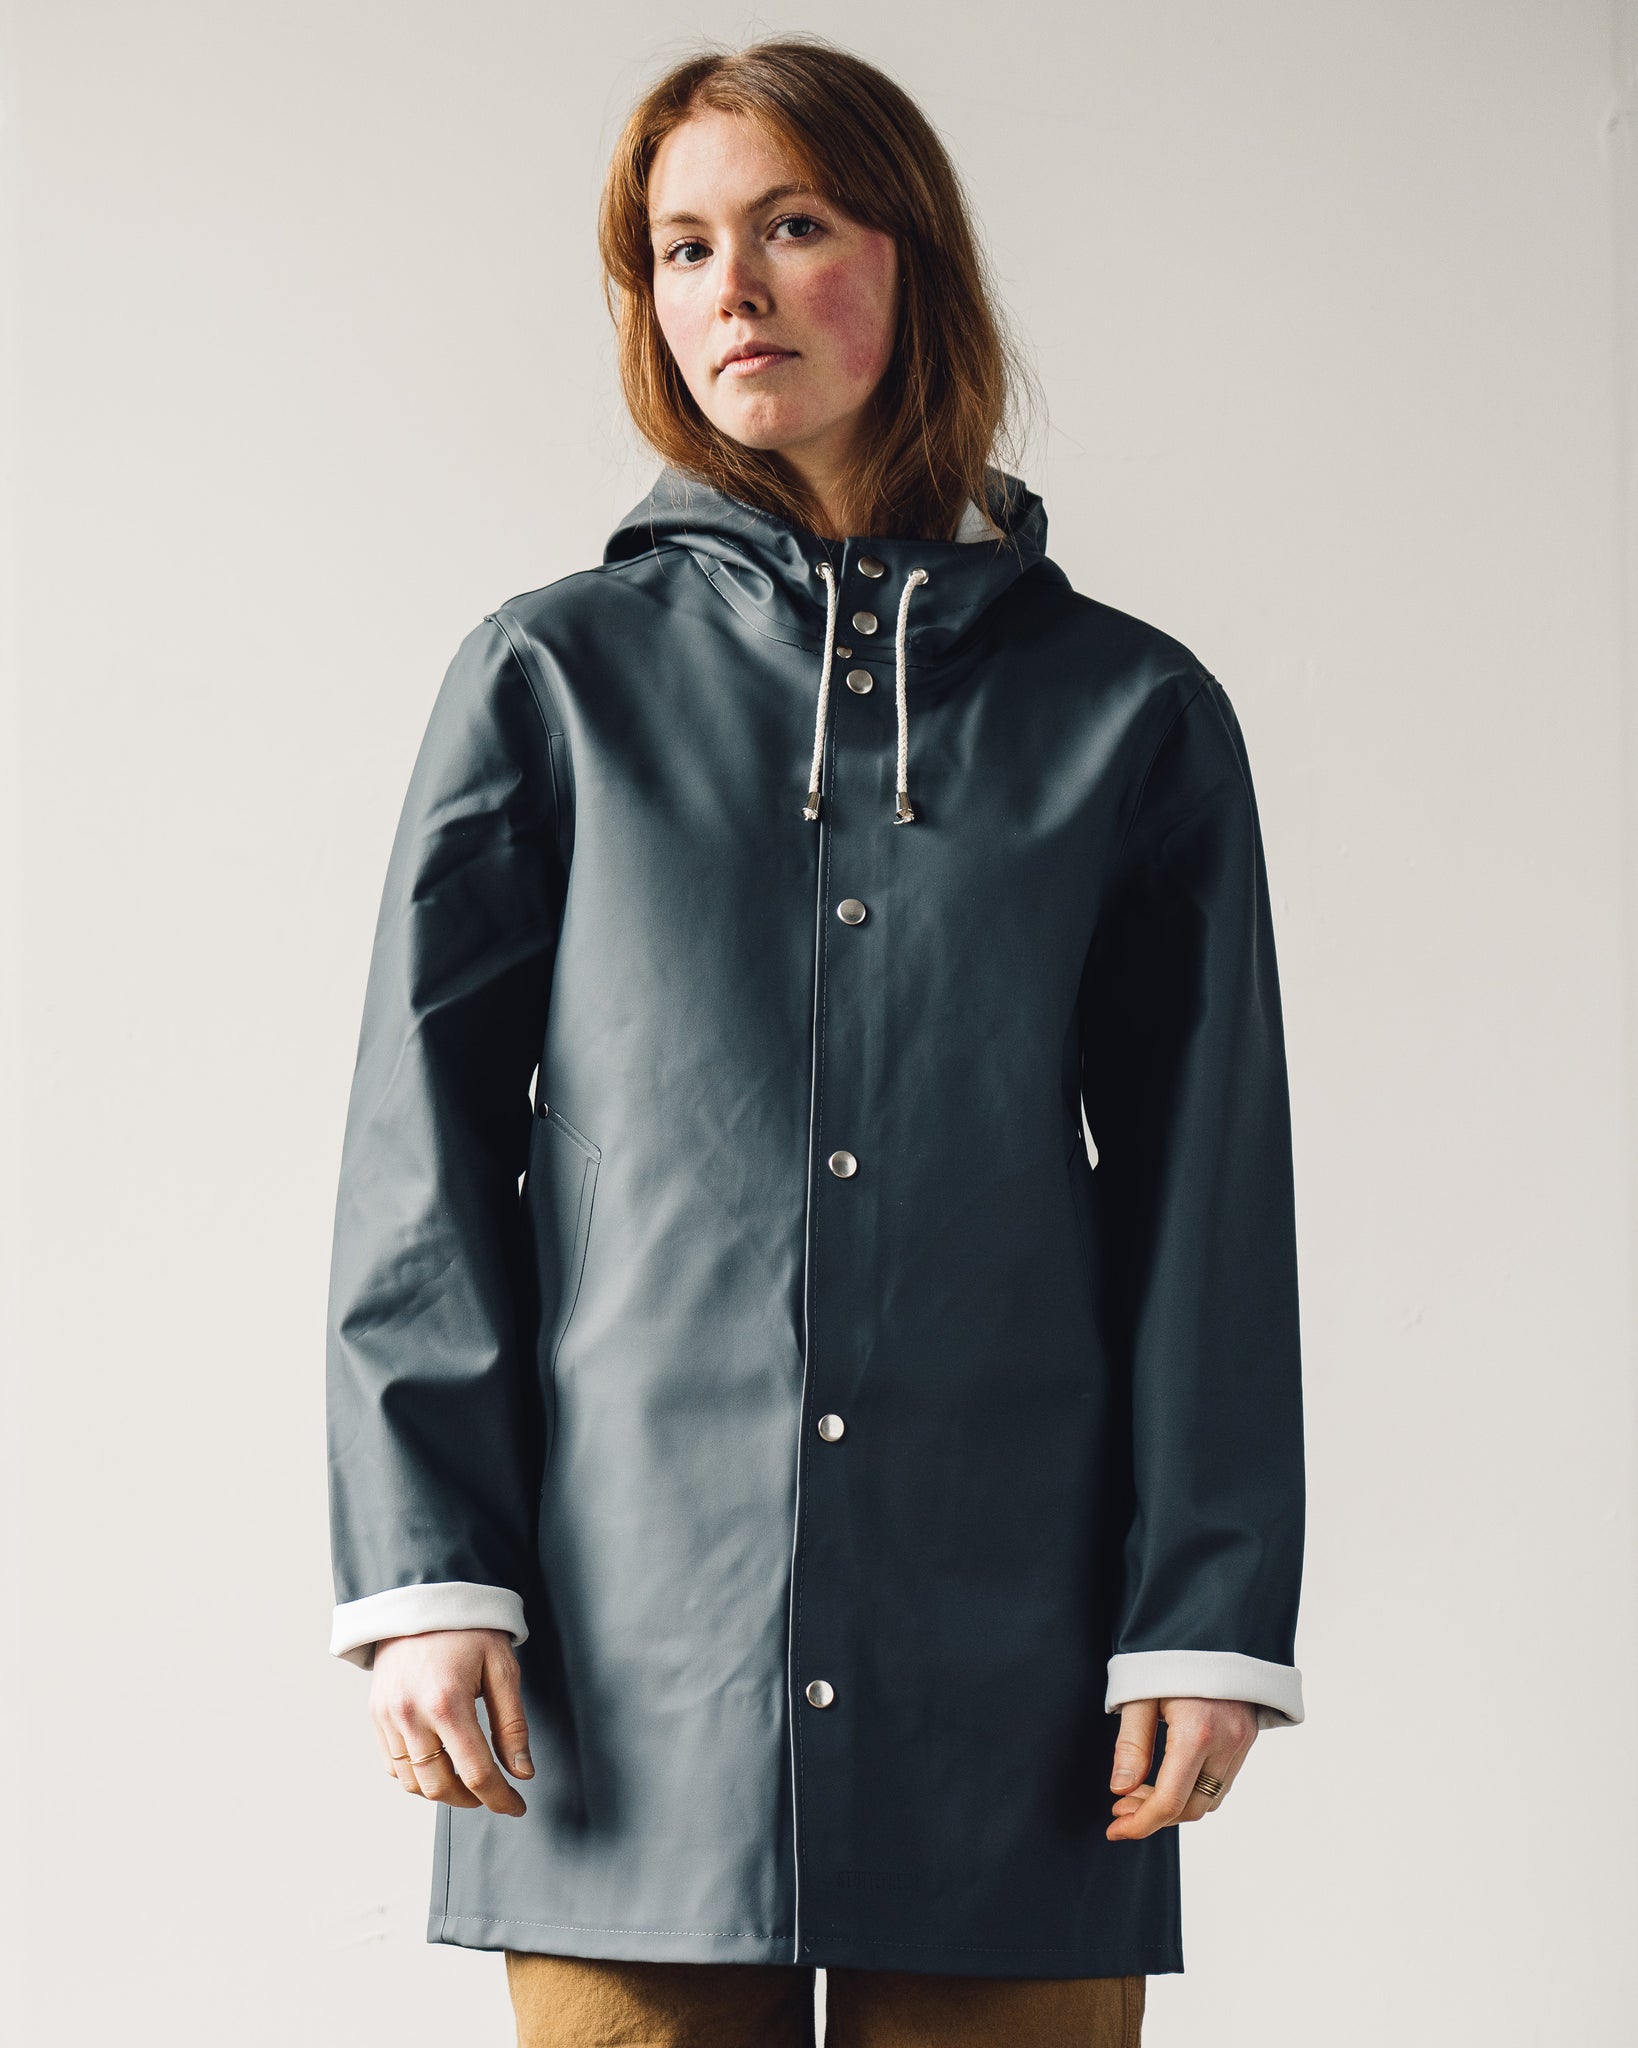 Stutterheim Stockholm Raincoat in Charcoal | Glasswing Shop | Glasswing